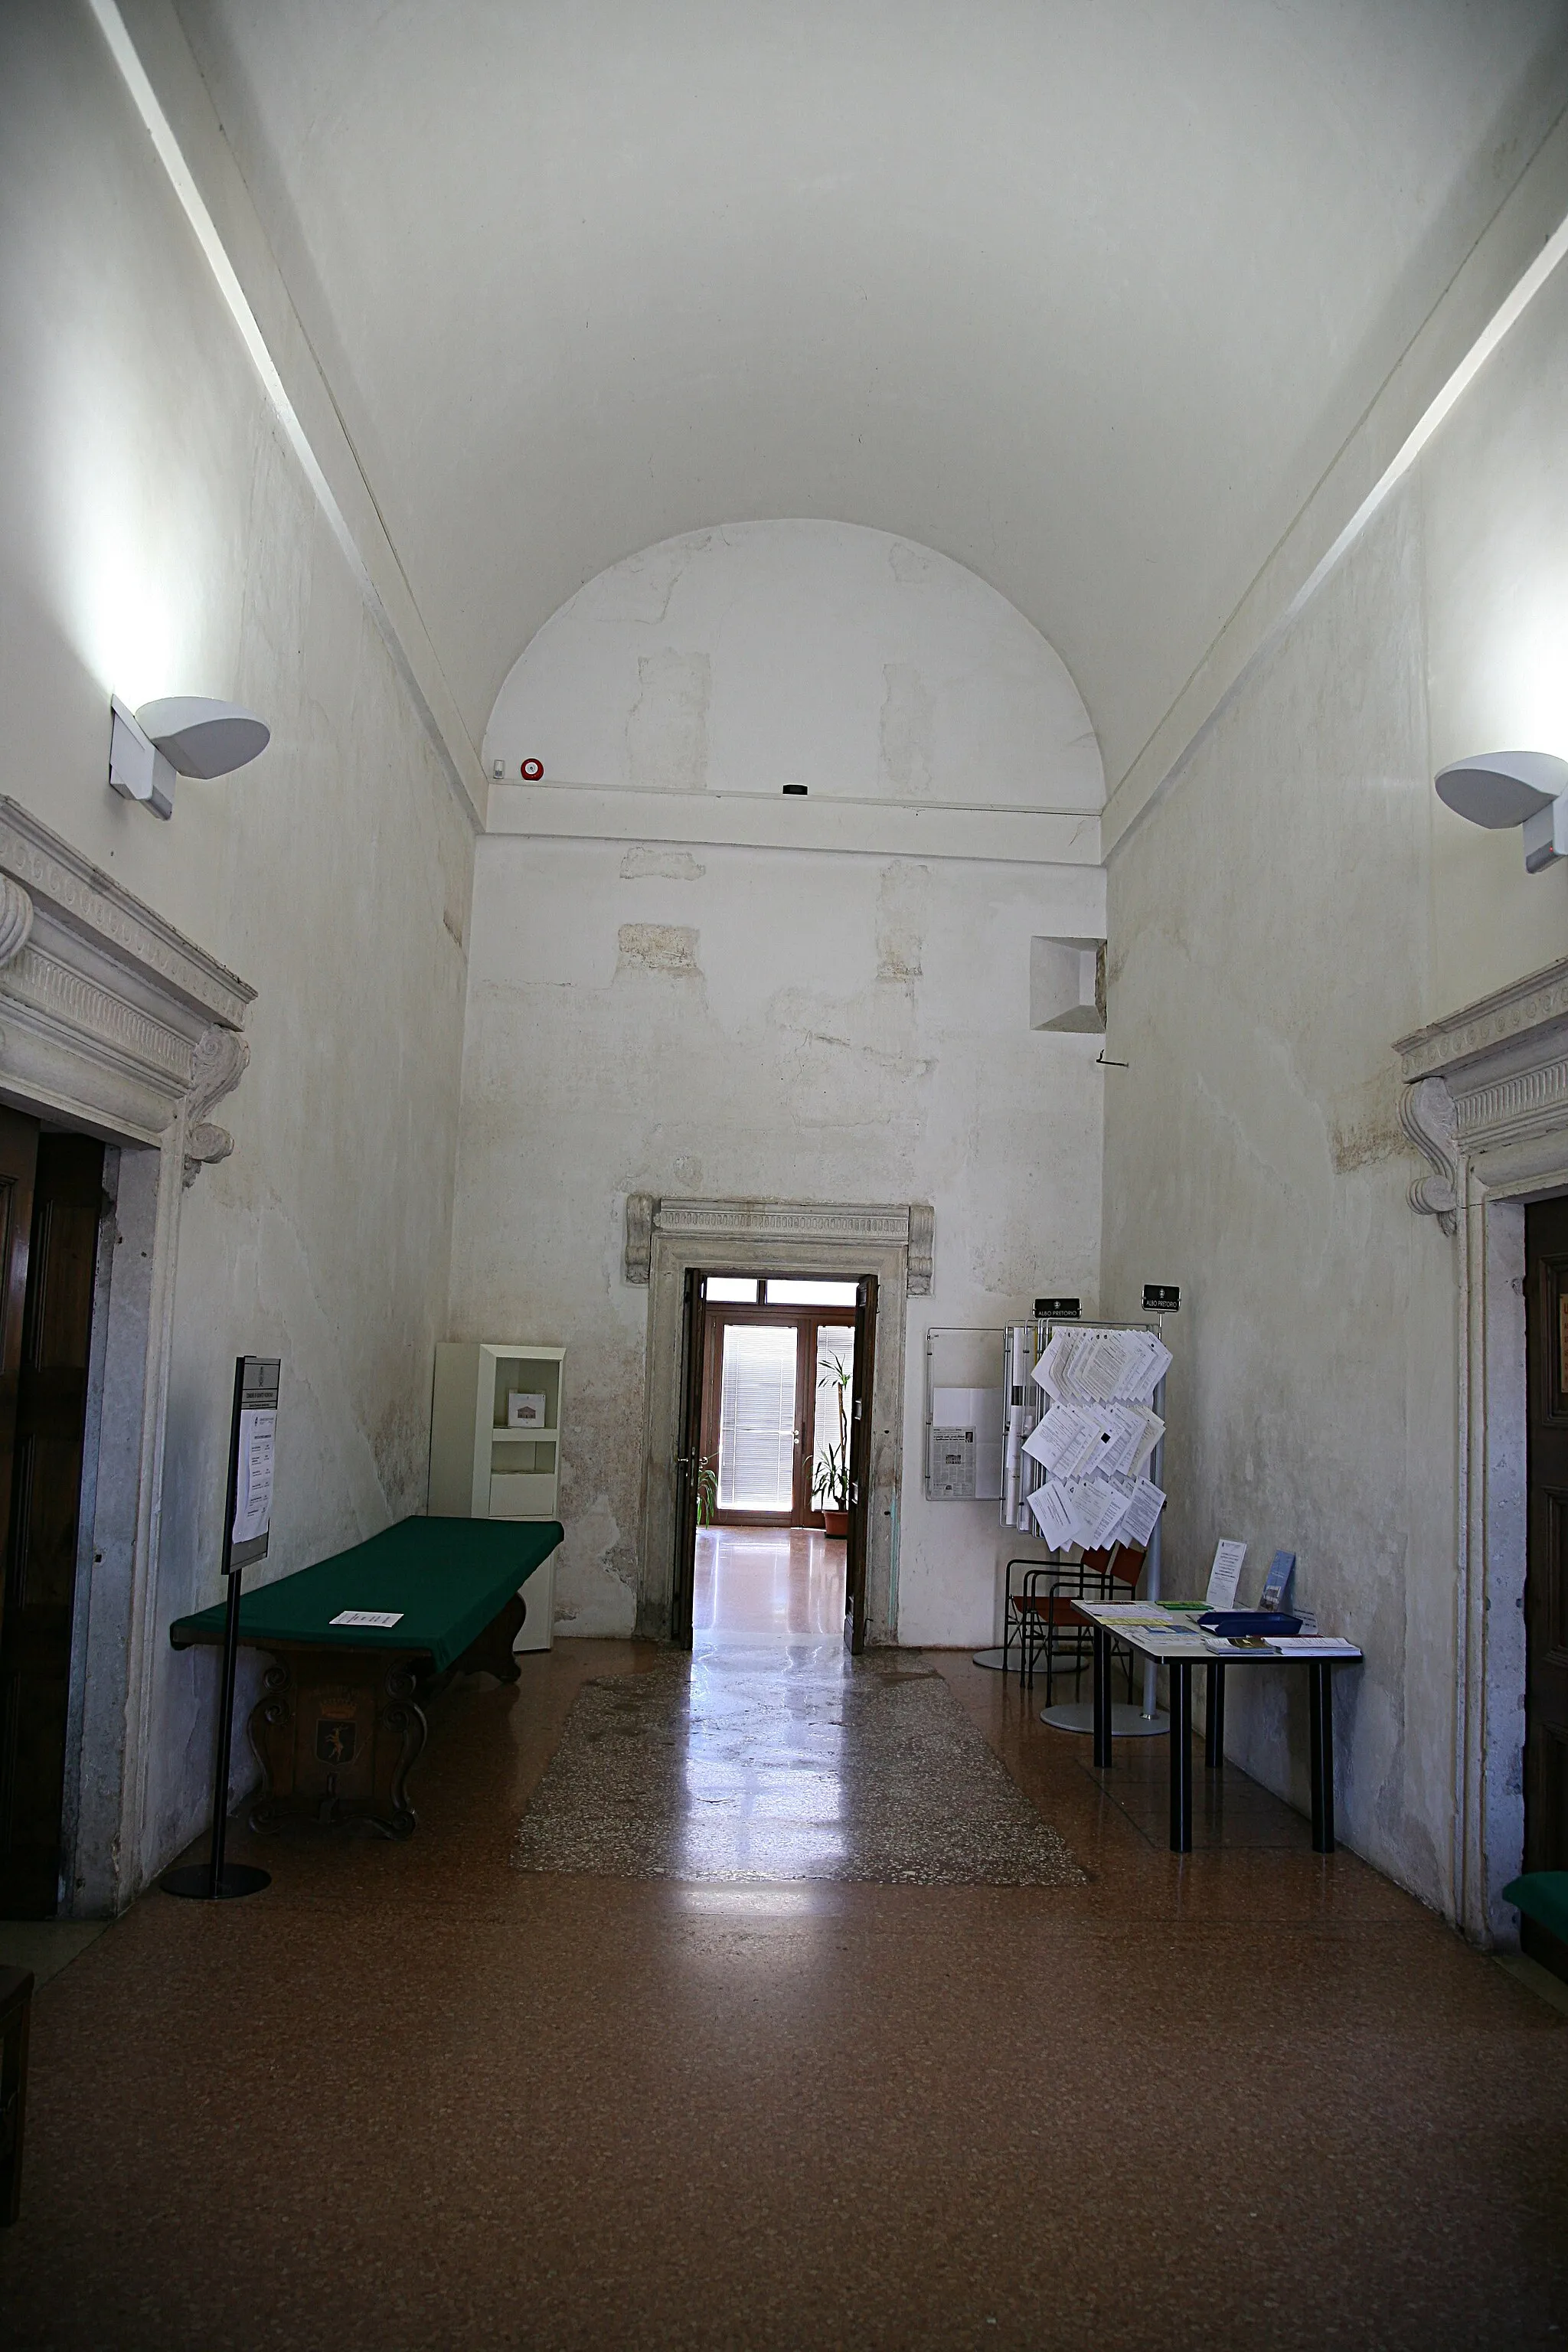 Photo showing: Villa Thiene at Quinto Vicentino by Andrea Palladio.